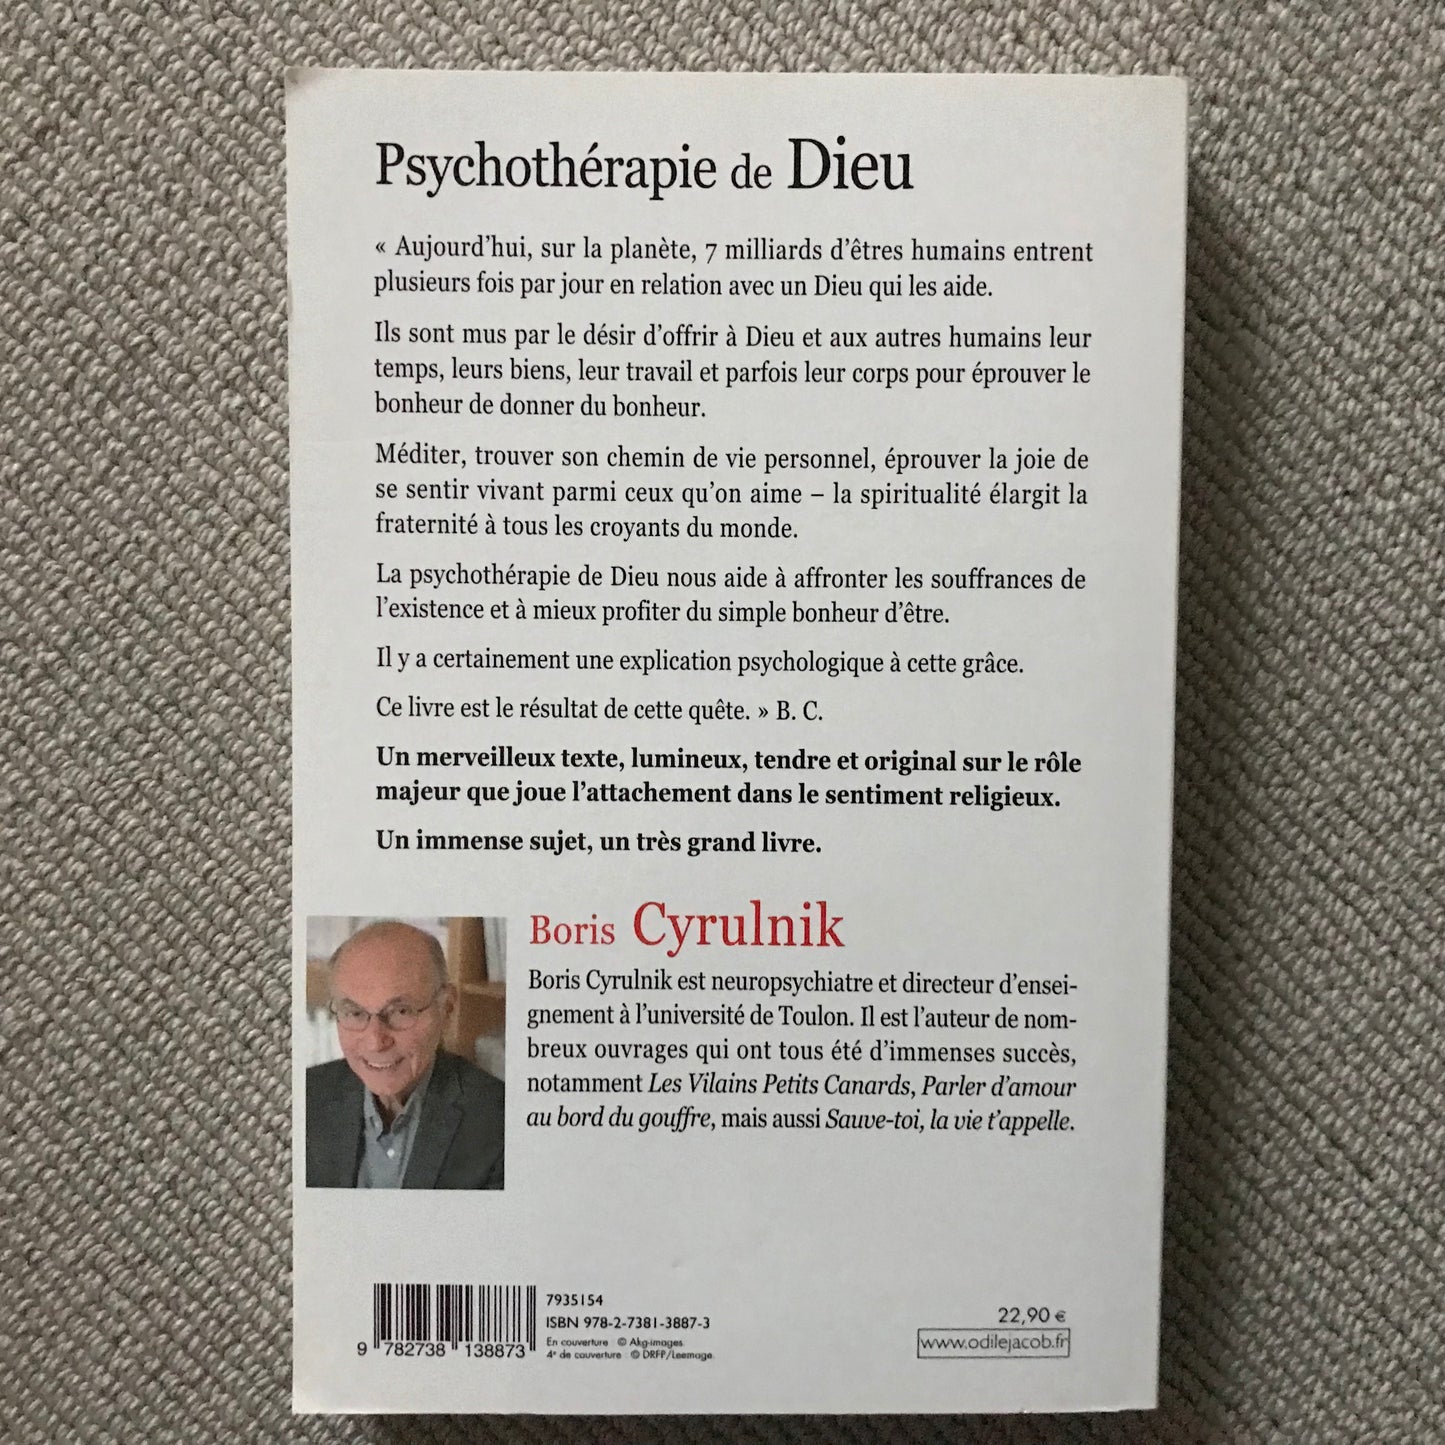 Cyrulnik, Boris - Psychothérapie de Dieu